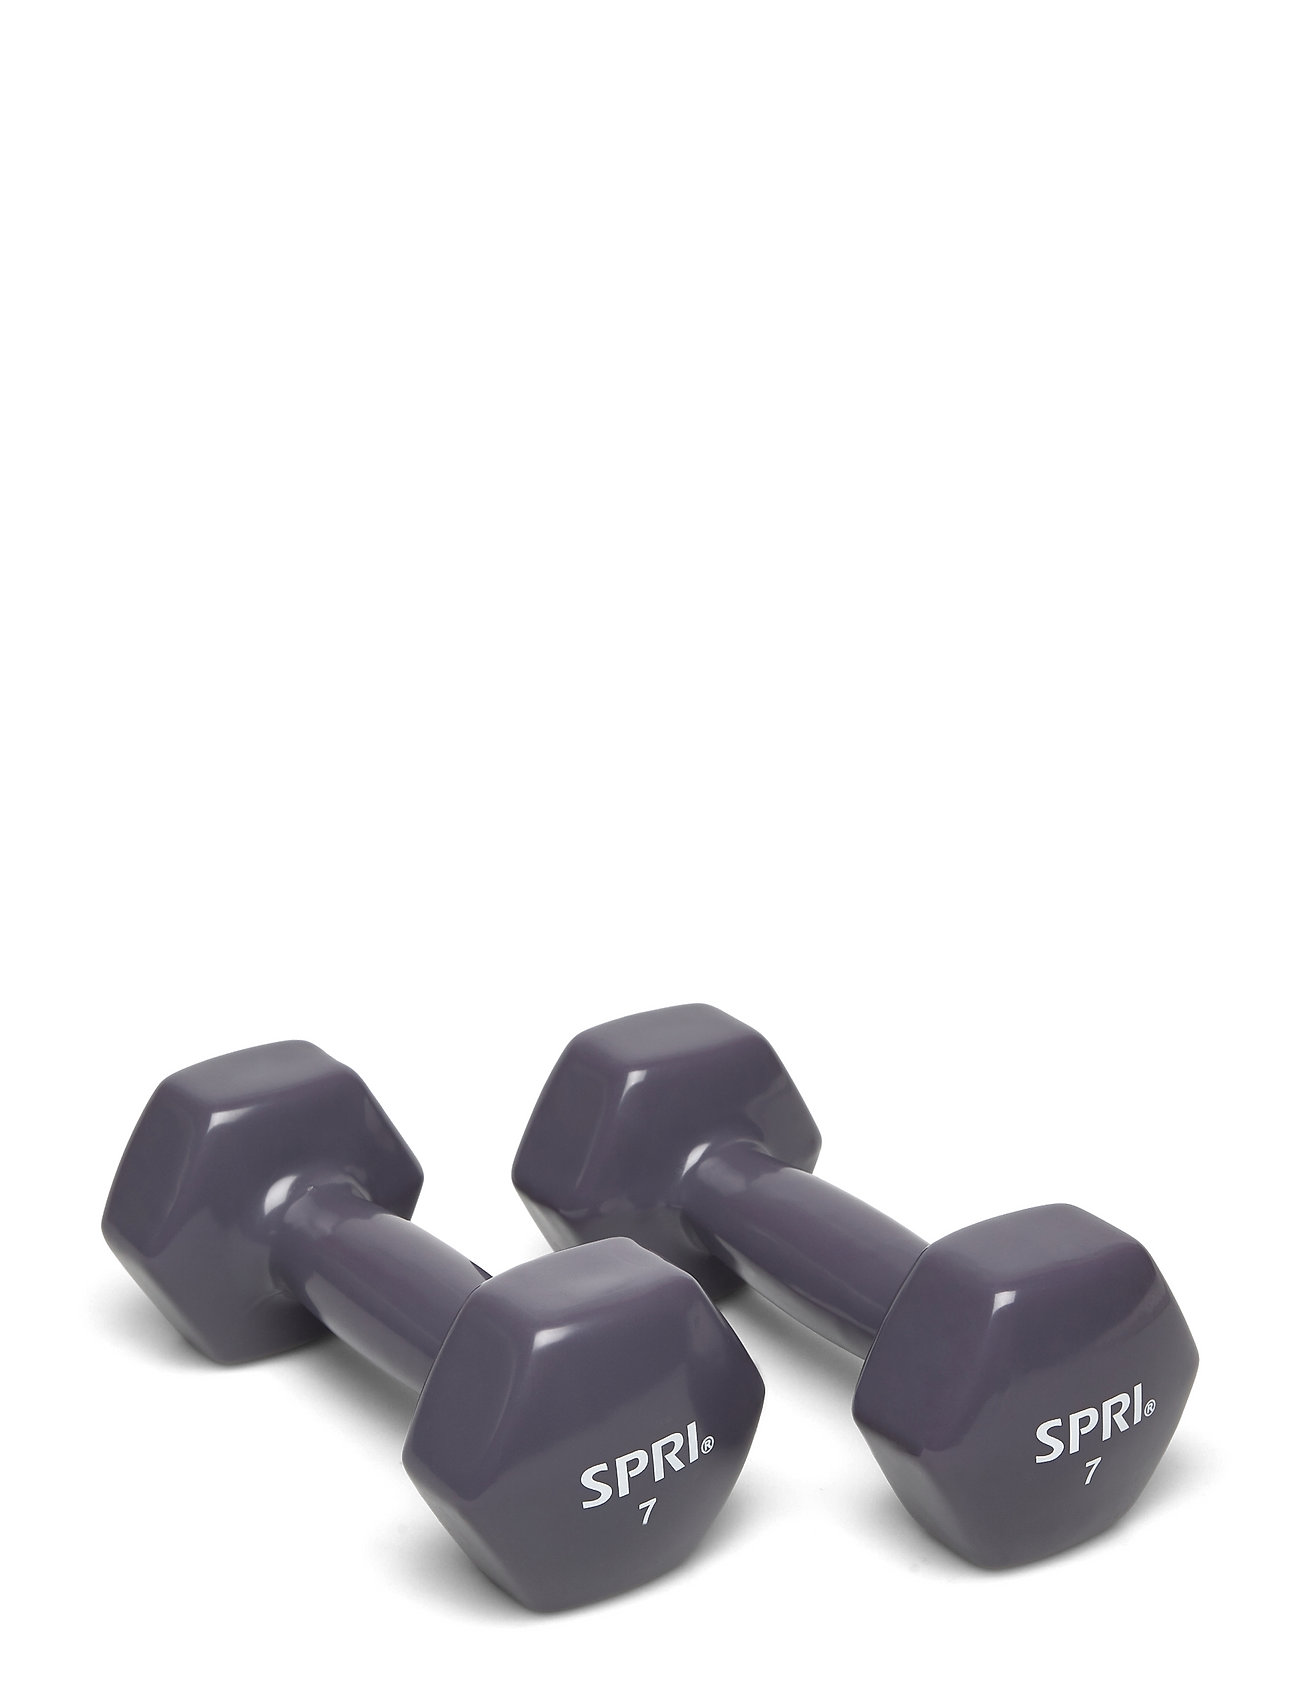 Spri Dumbbell Vinyl 3,2Kg/7Lb Pair Sport Sports Equipment Workout Equipment Gym Weights Purple Spri